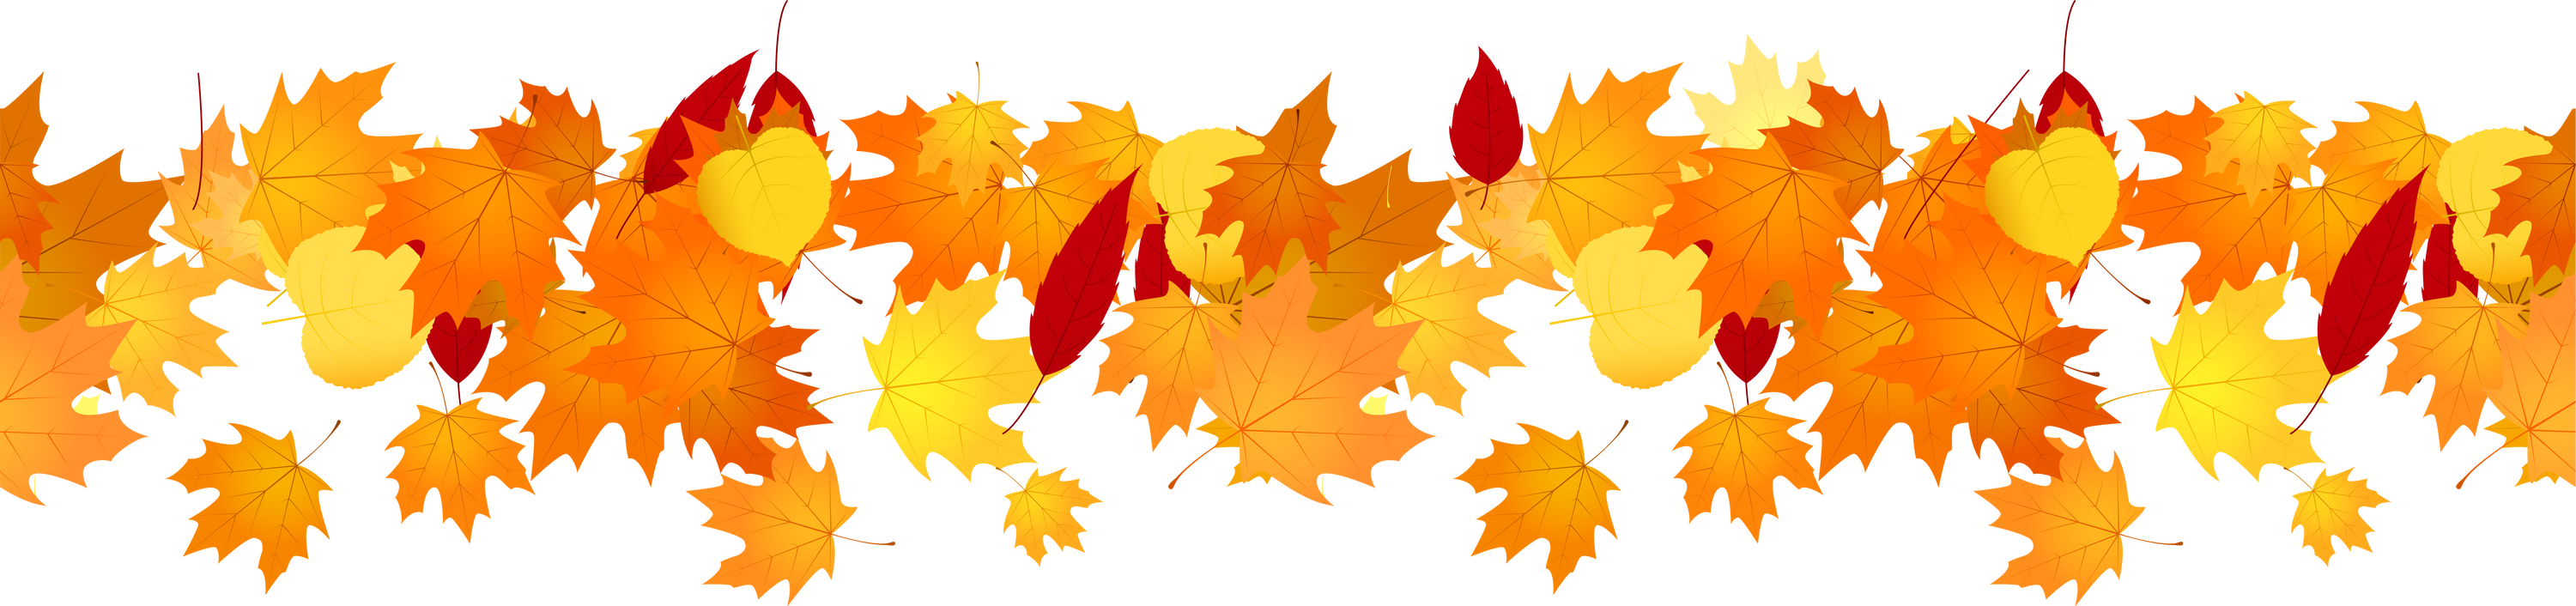 Autumn Seamless Banner of Fallen Leaves